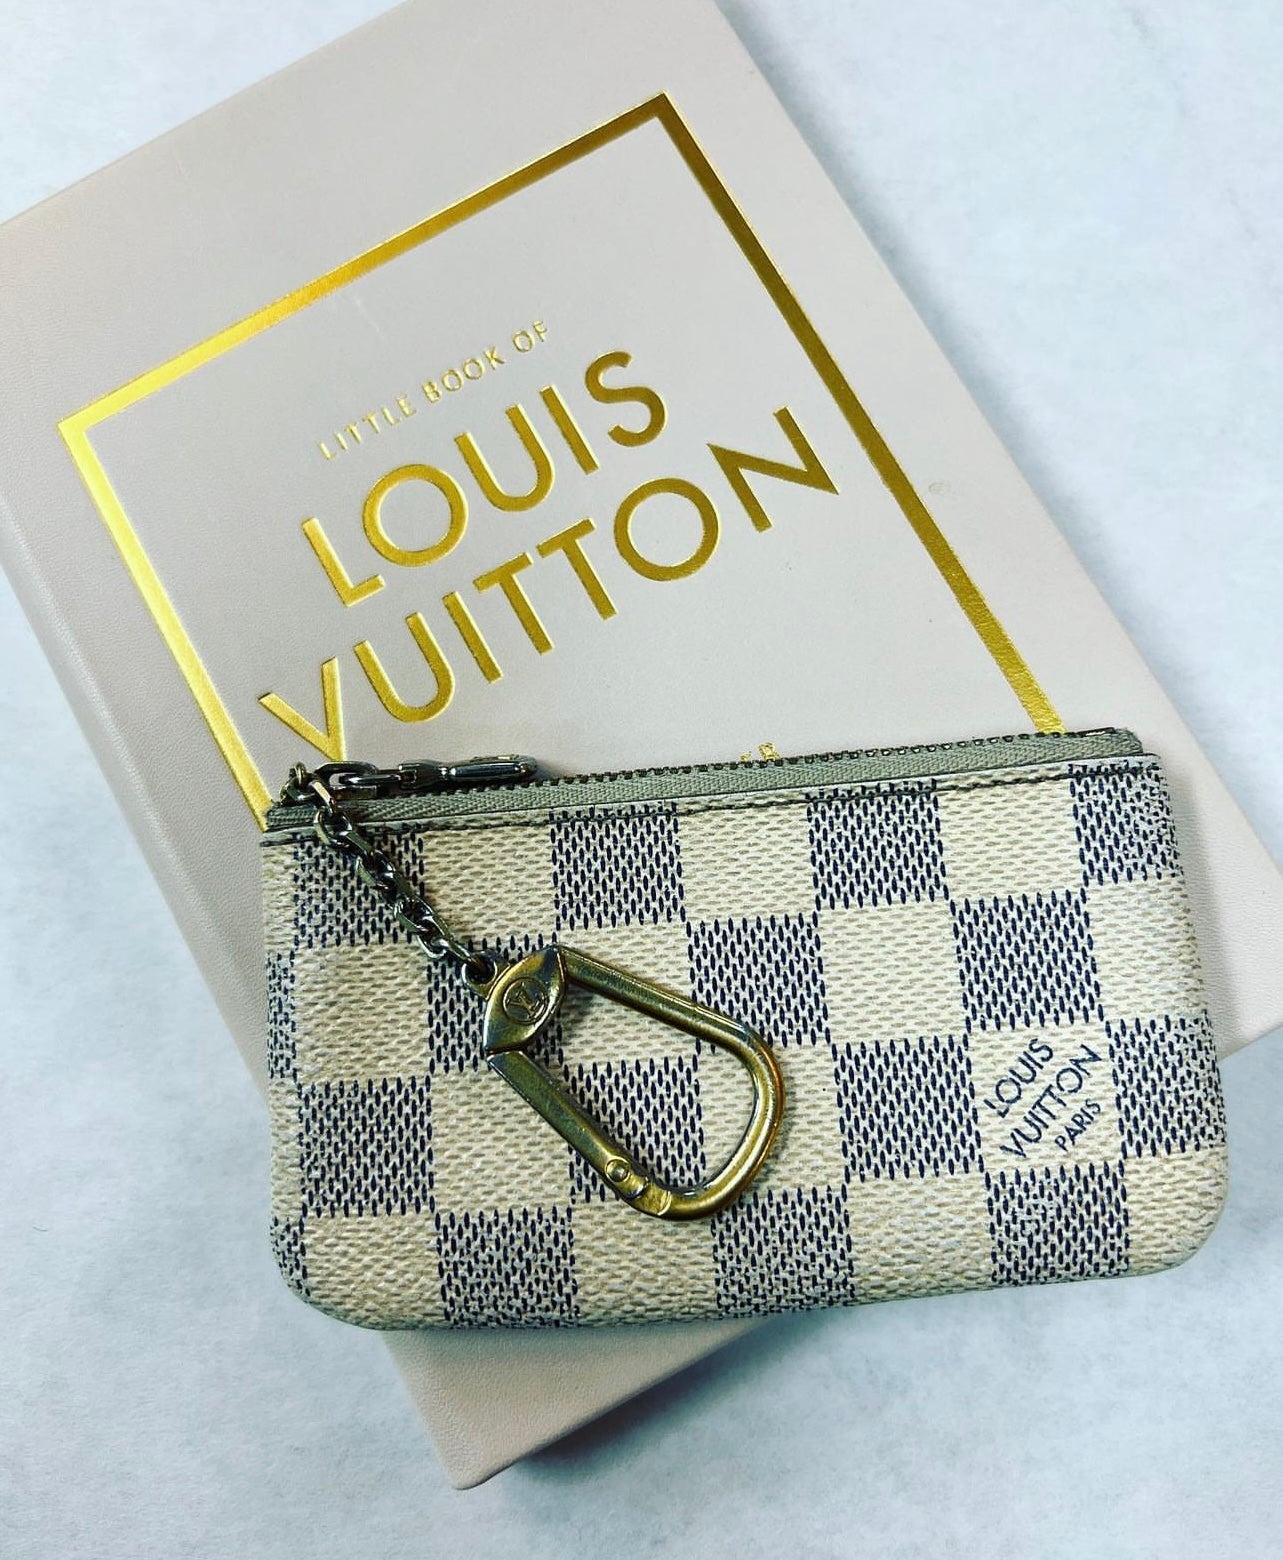 Louis Vuitton Damier Azur Key Pouch in Box